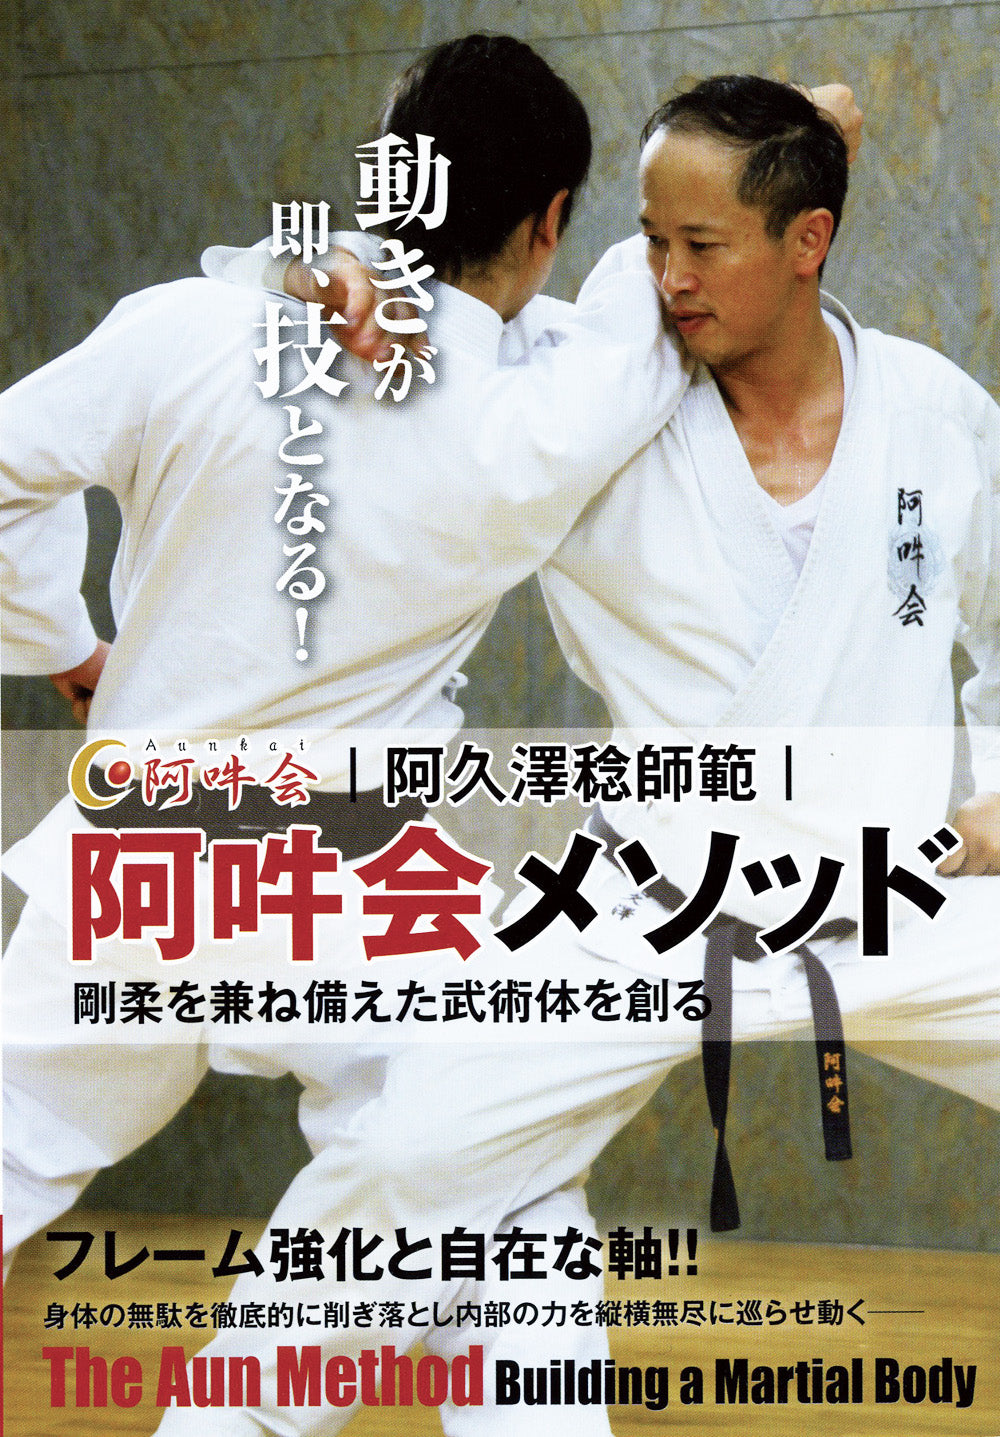 Aun Method of Building a Martial Body DVD by Minoru Akuzawa